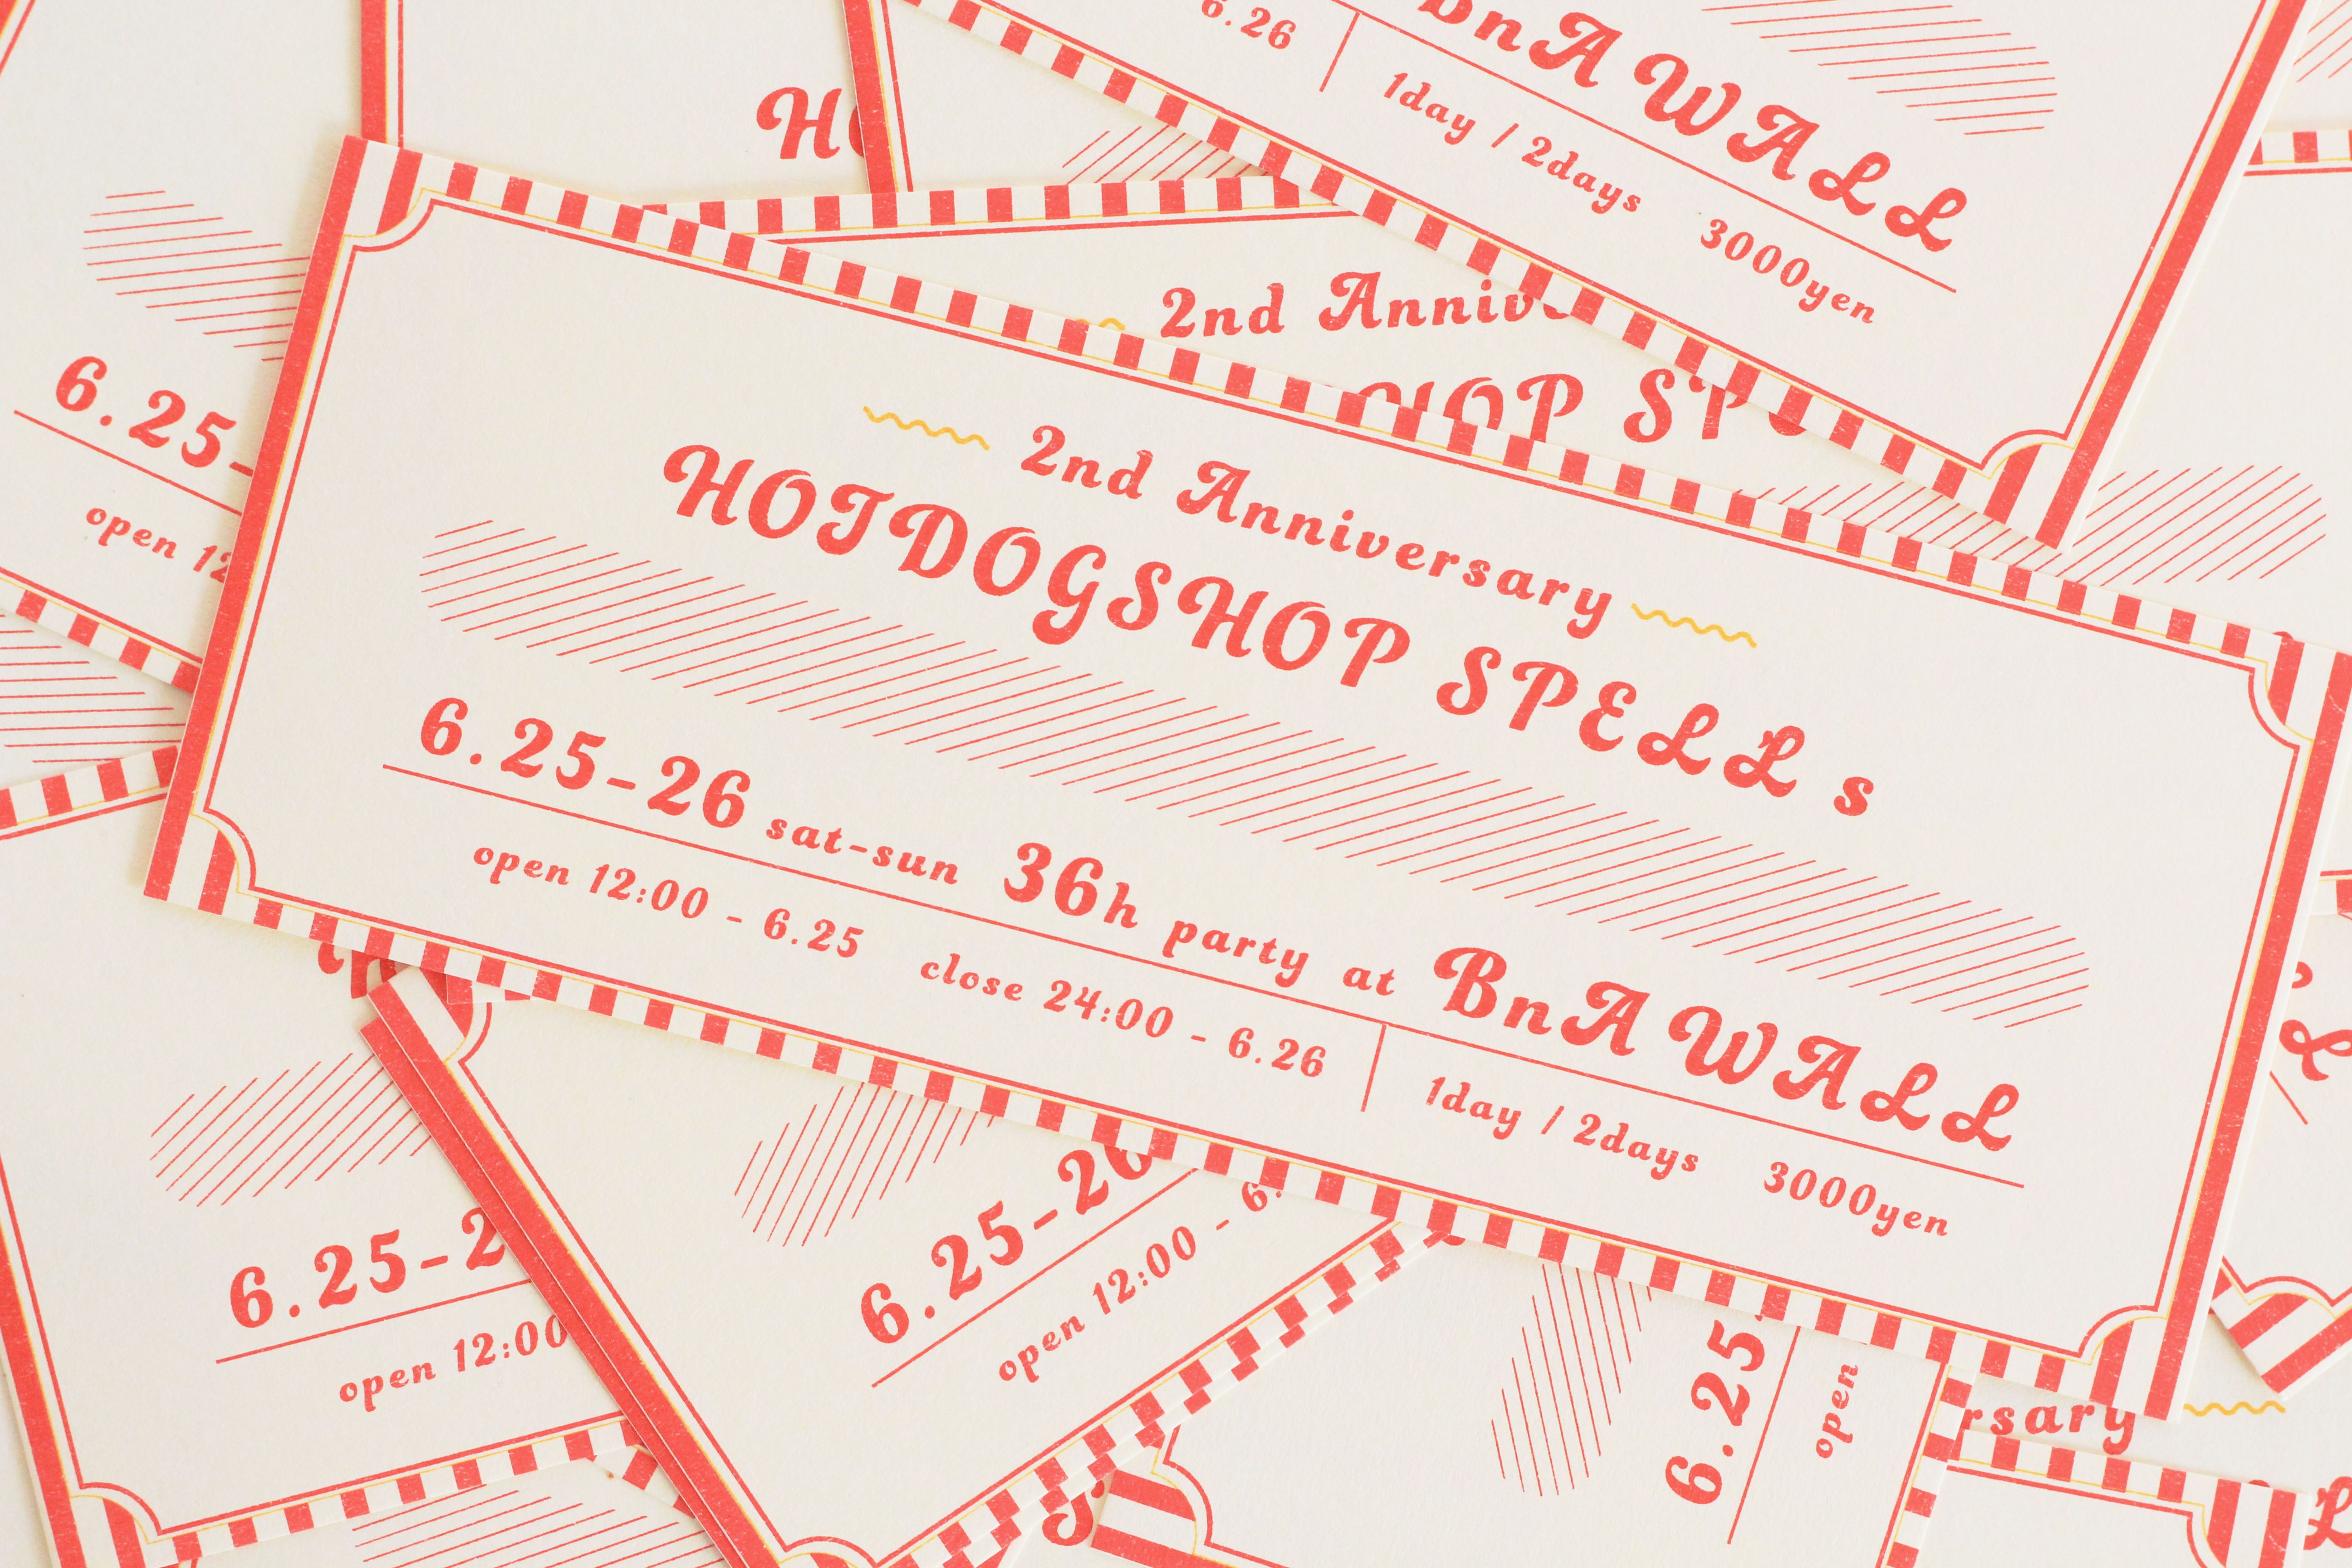 『HOTDOG SHOP SPELL’s』2nd ​​Anniversary Party